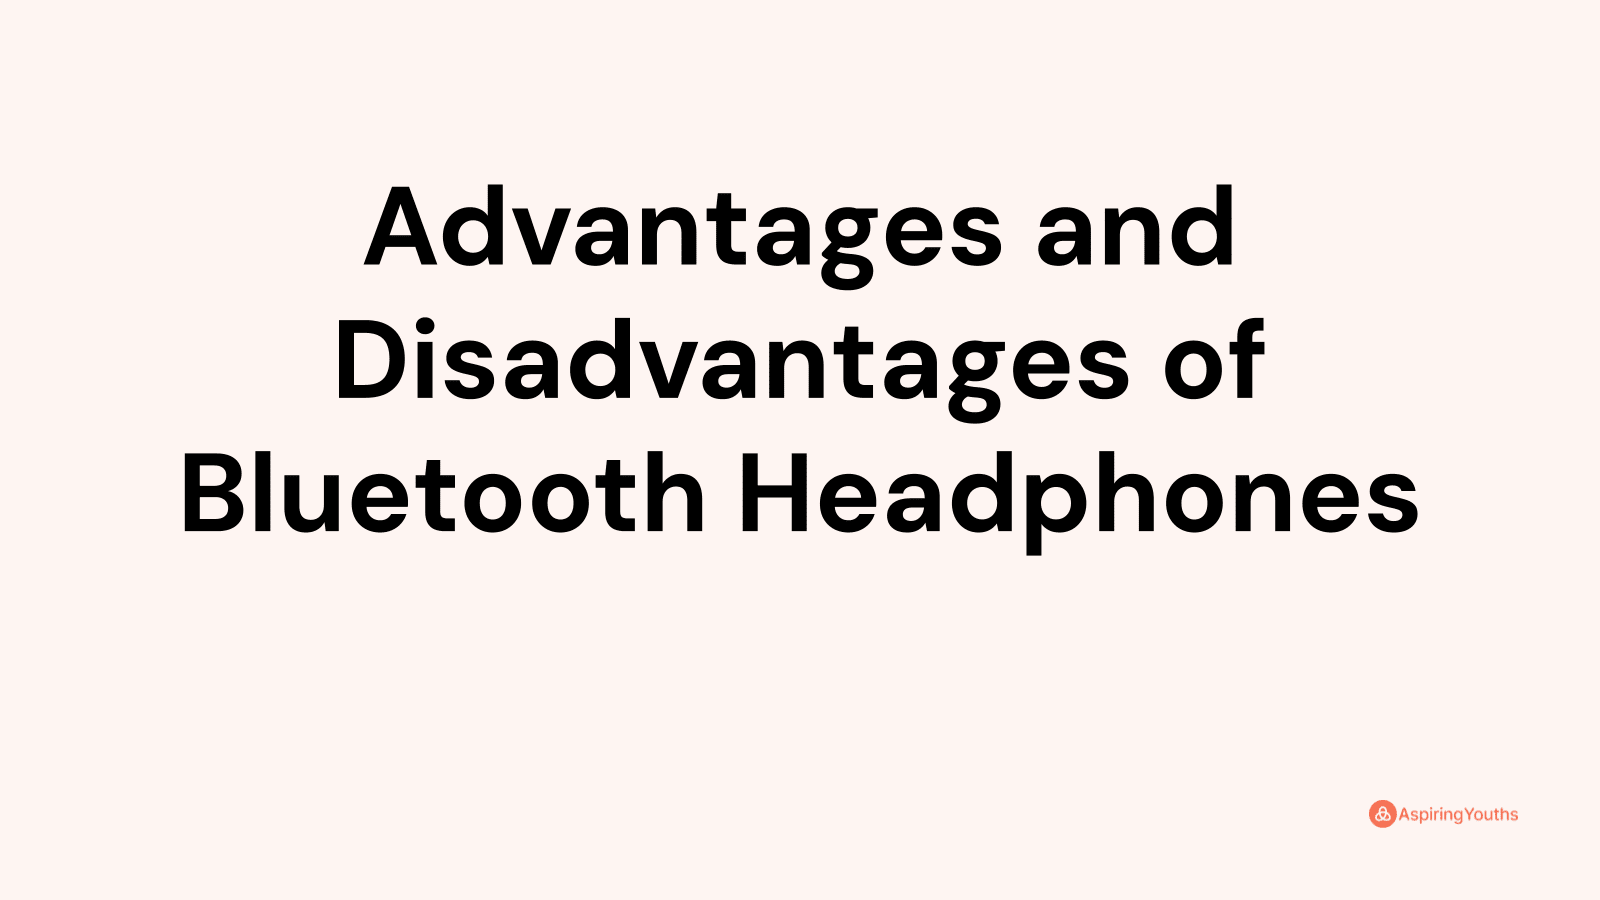 Advantages and disadvantages of Bluetooth Headphones